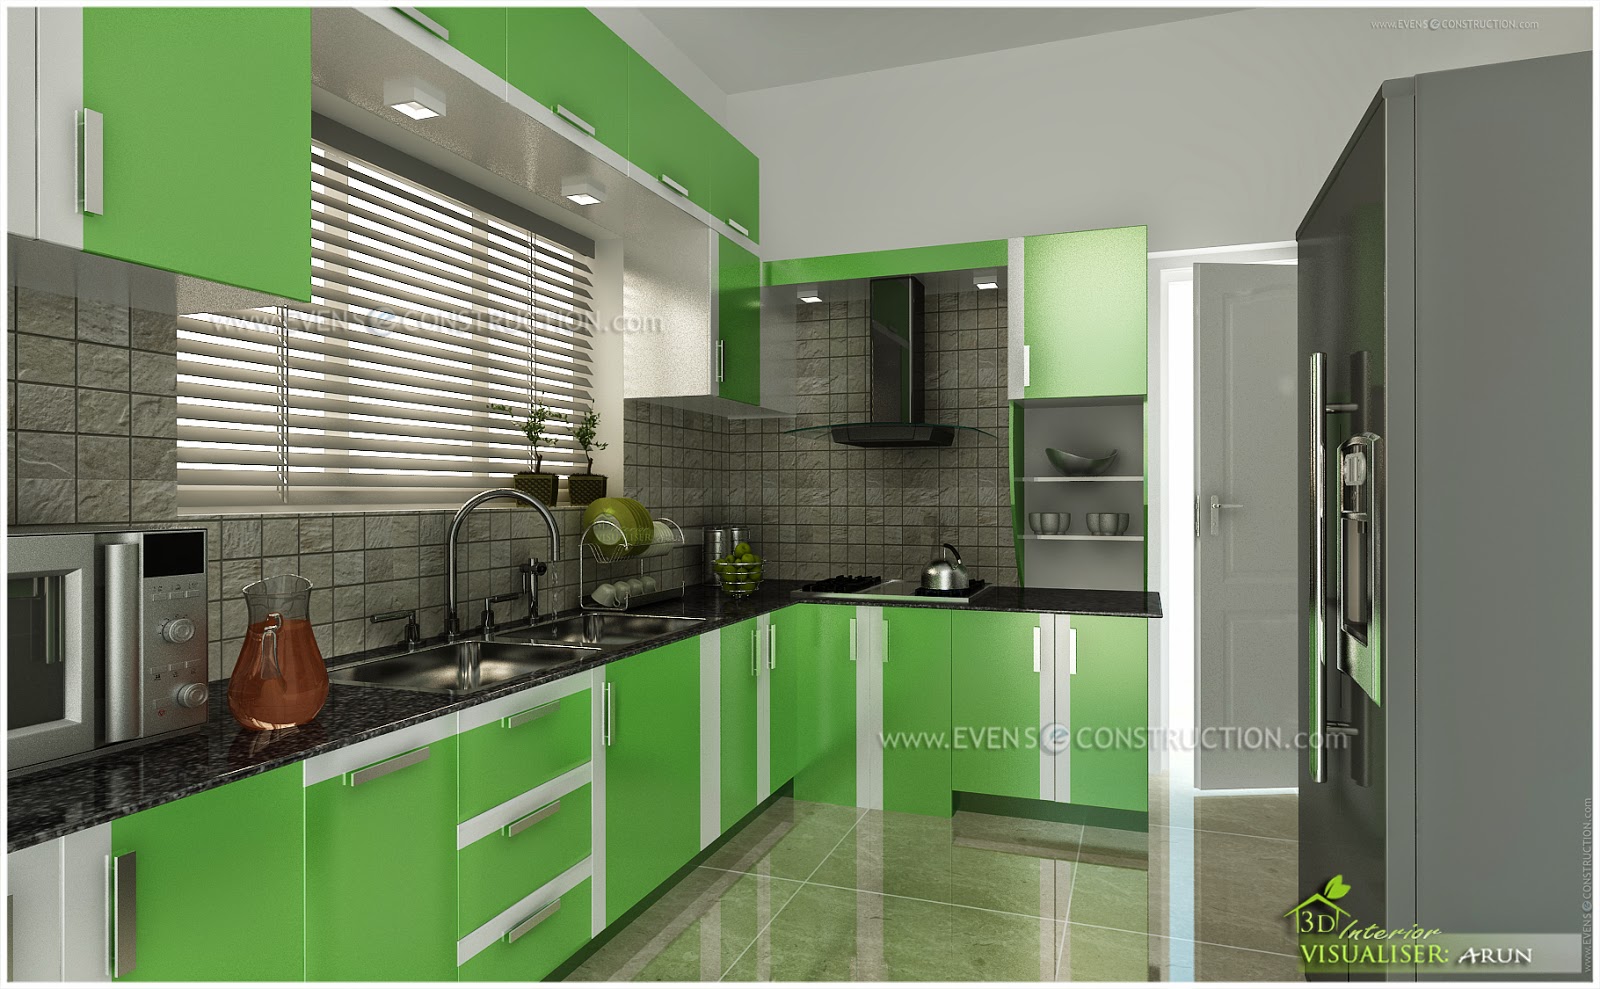 Evens Construction Pvt Ltd: Small Kerala kitchen interior design